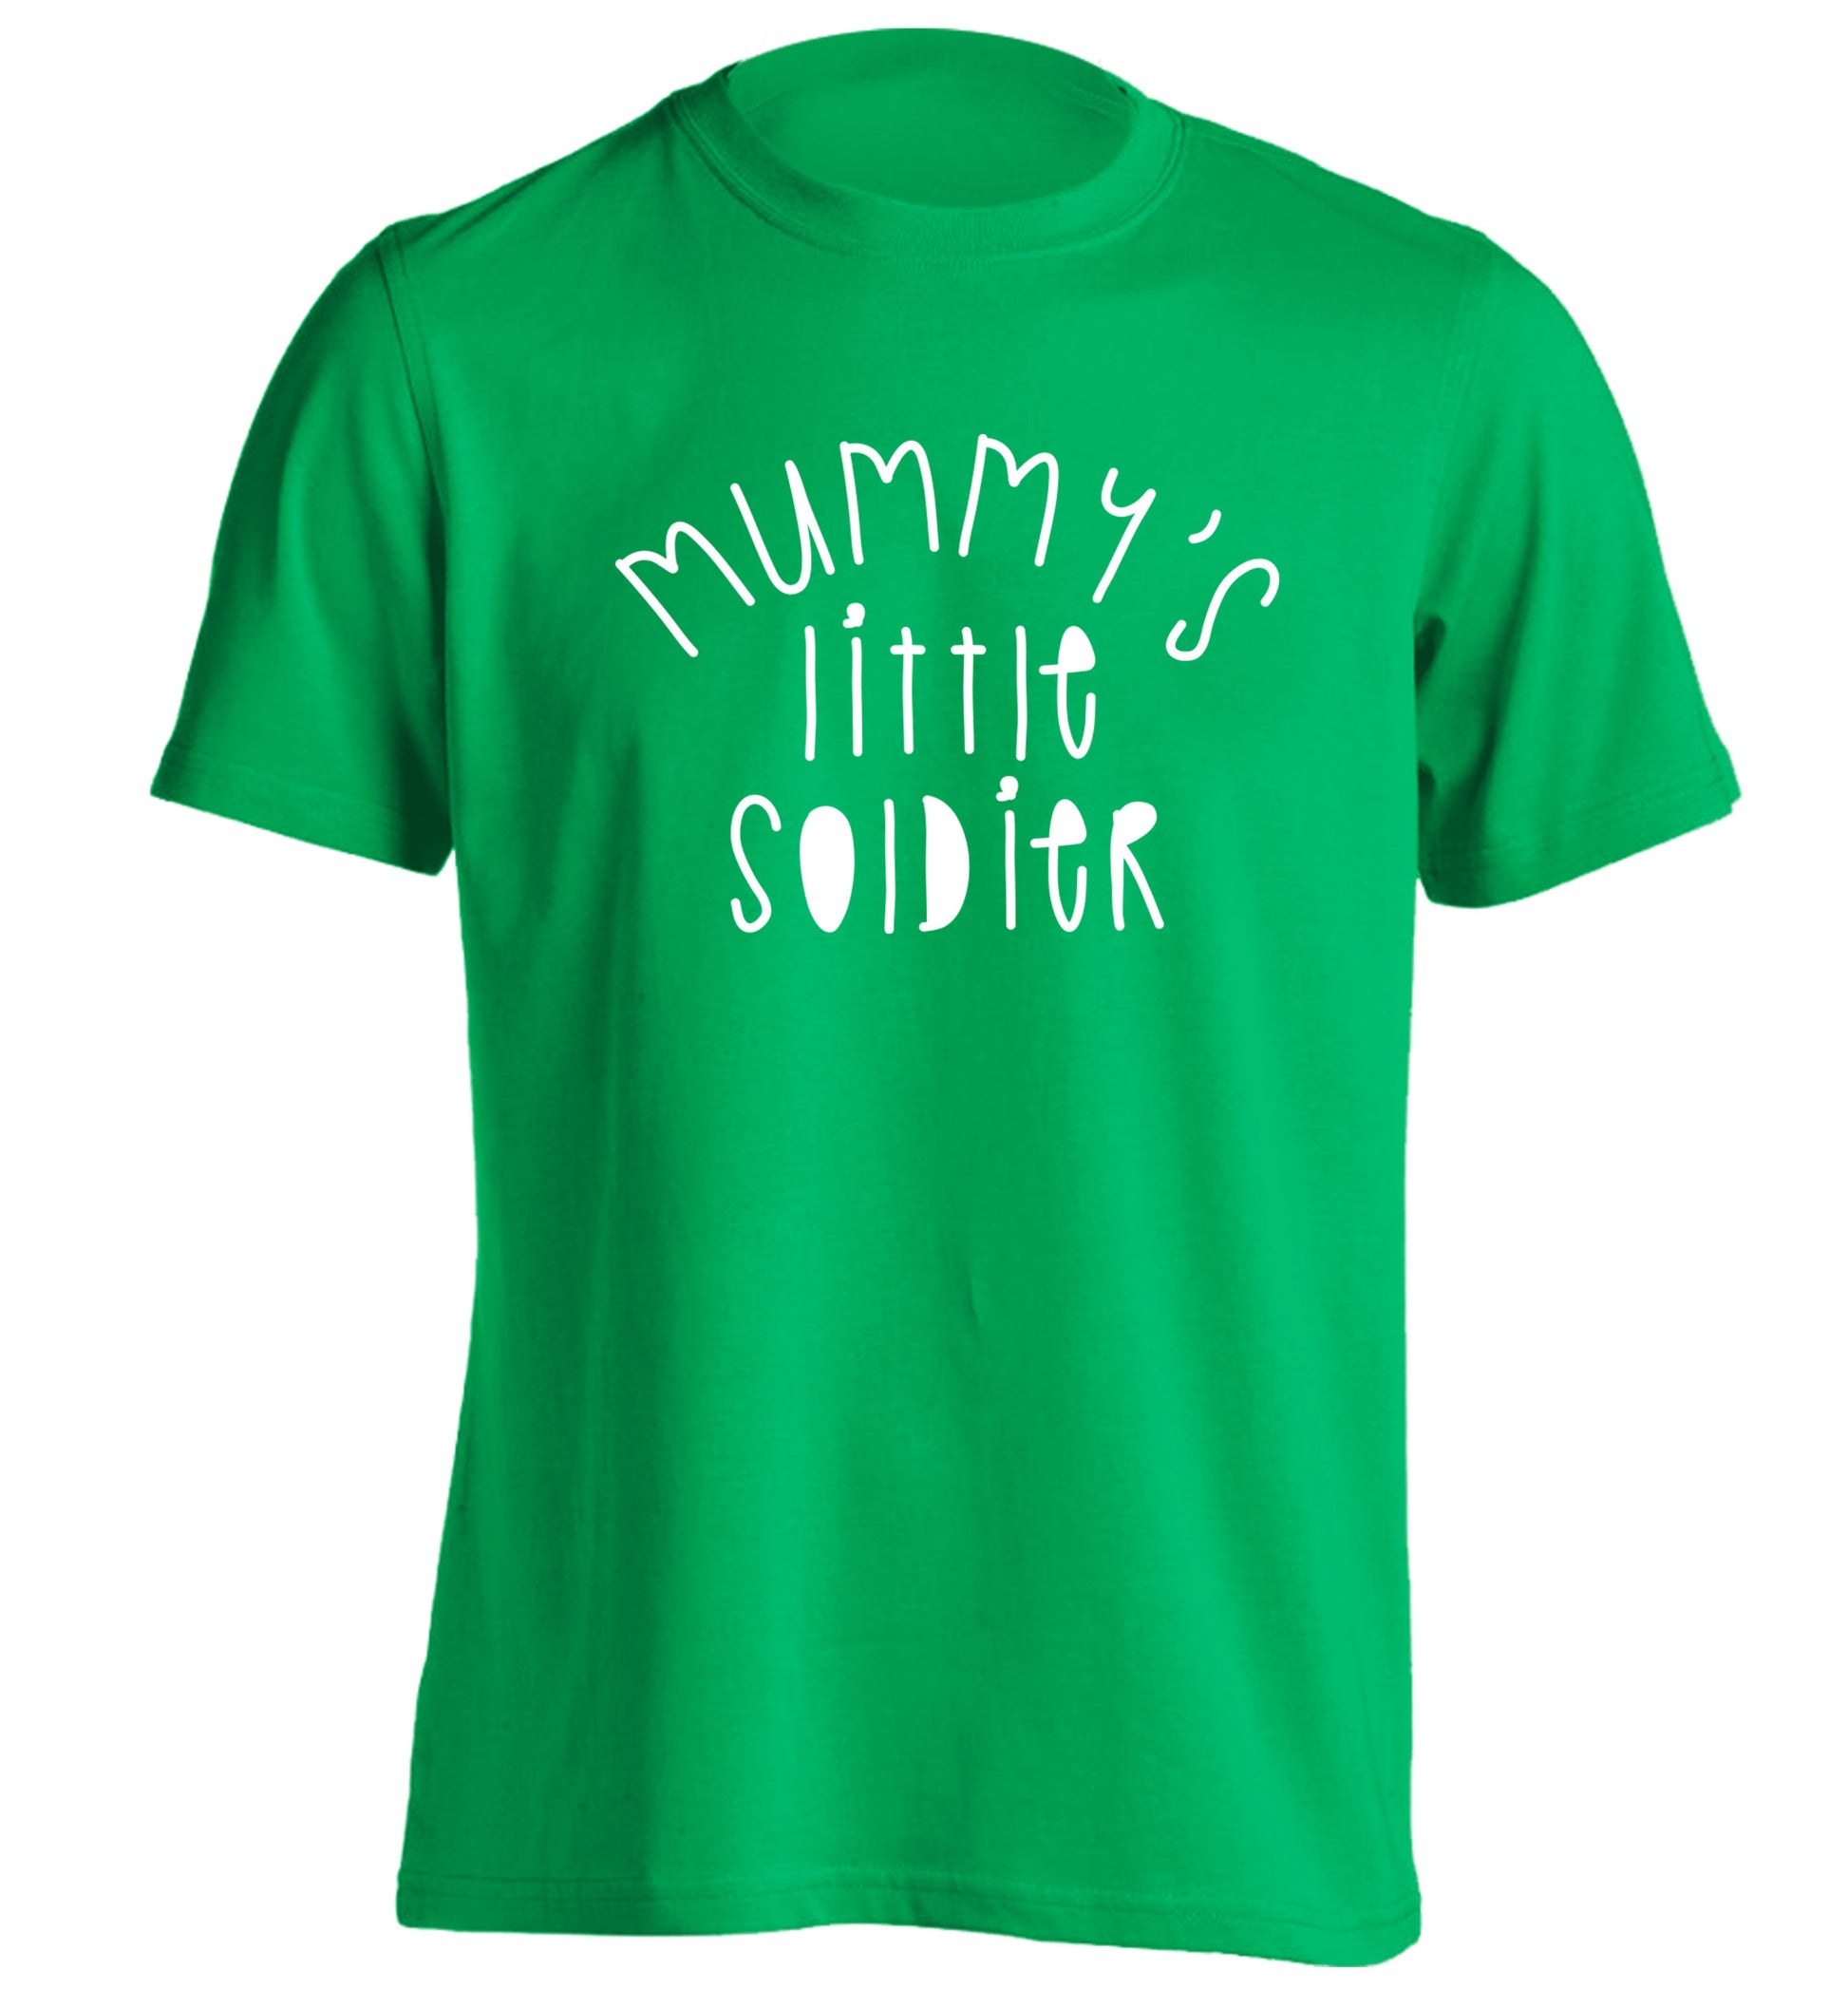 Mummy's little soldier adults unisex green Tshirt 2XL